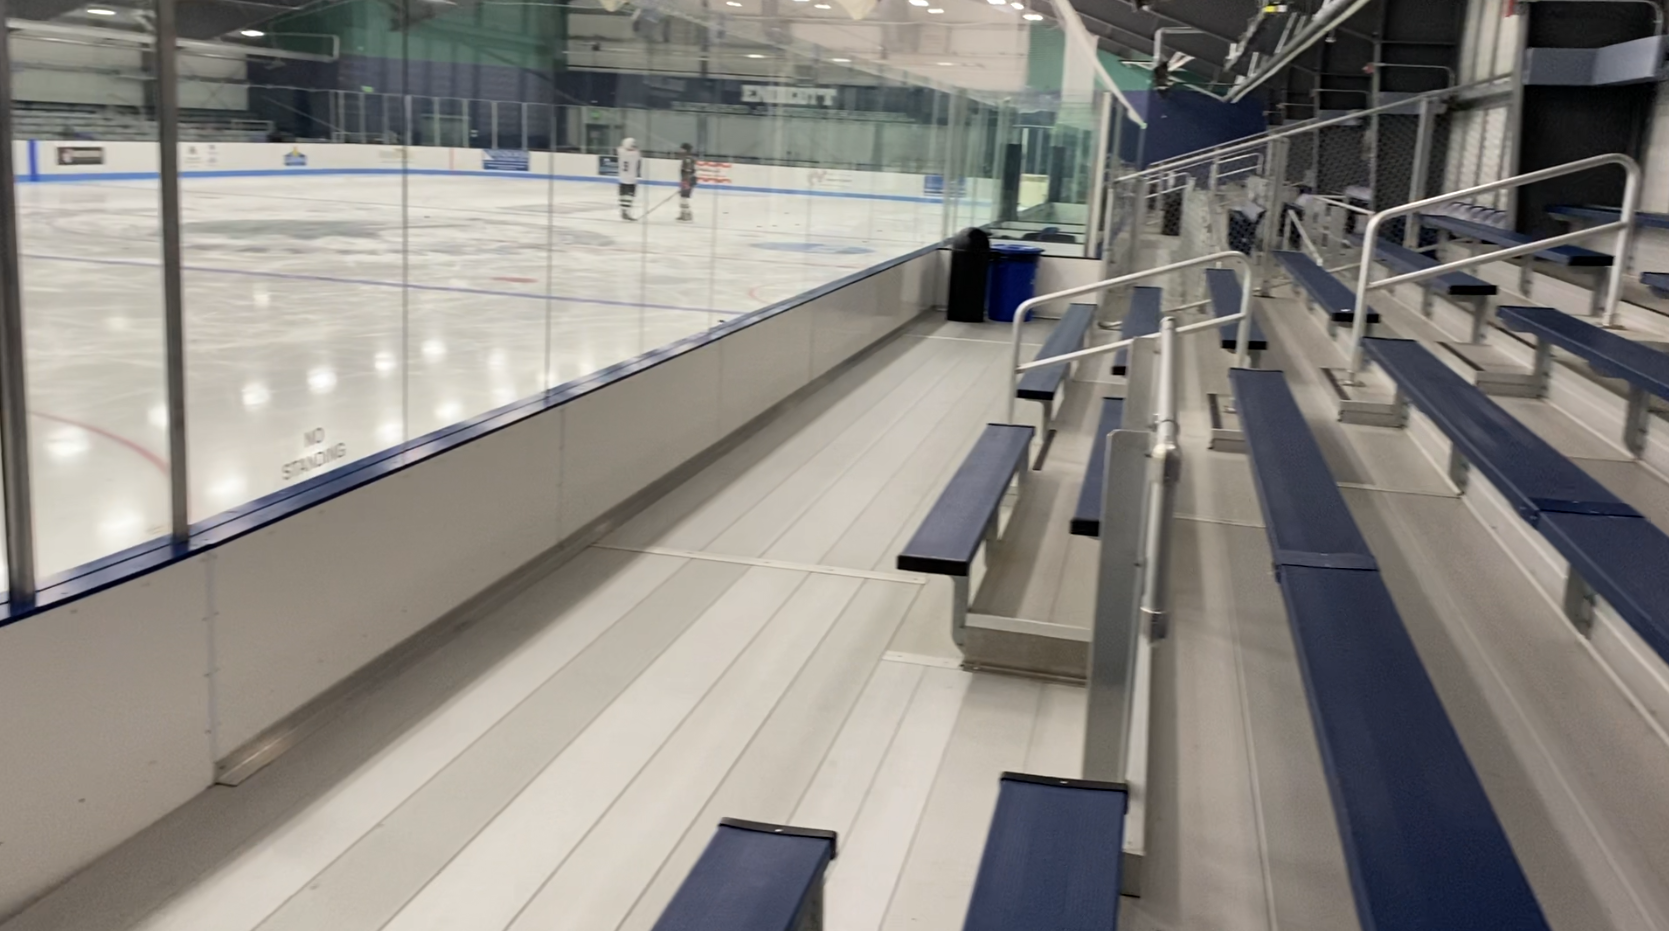 Danvers High School hockey needs a dose of sunshine - The Boston Globe